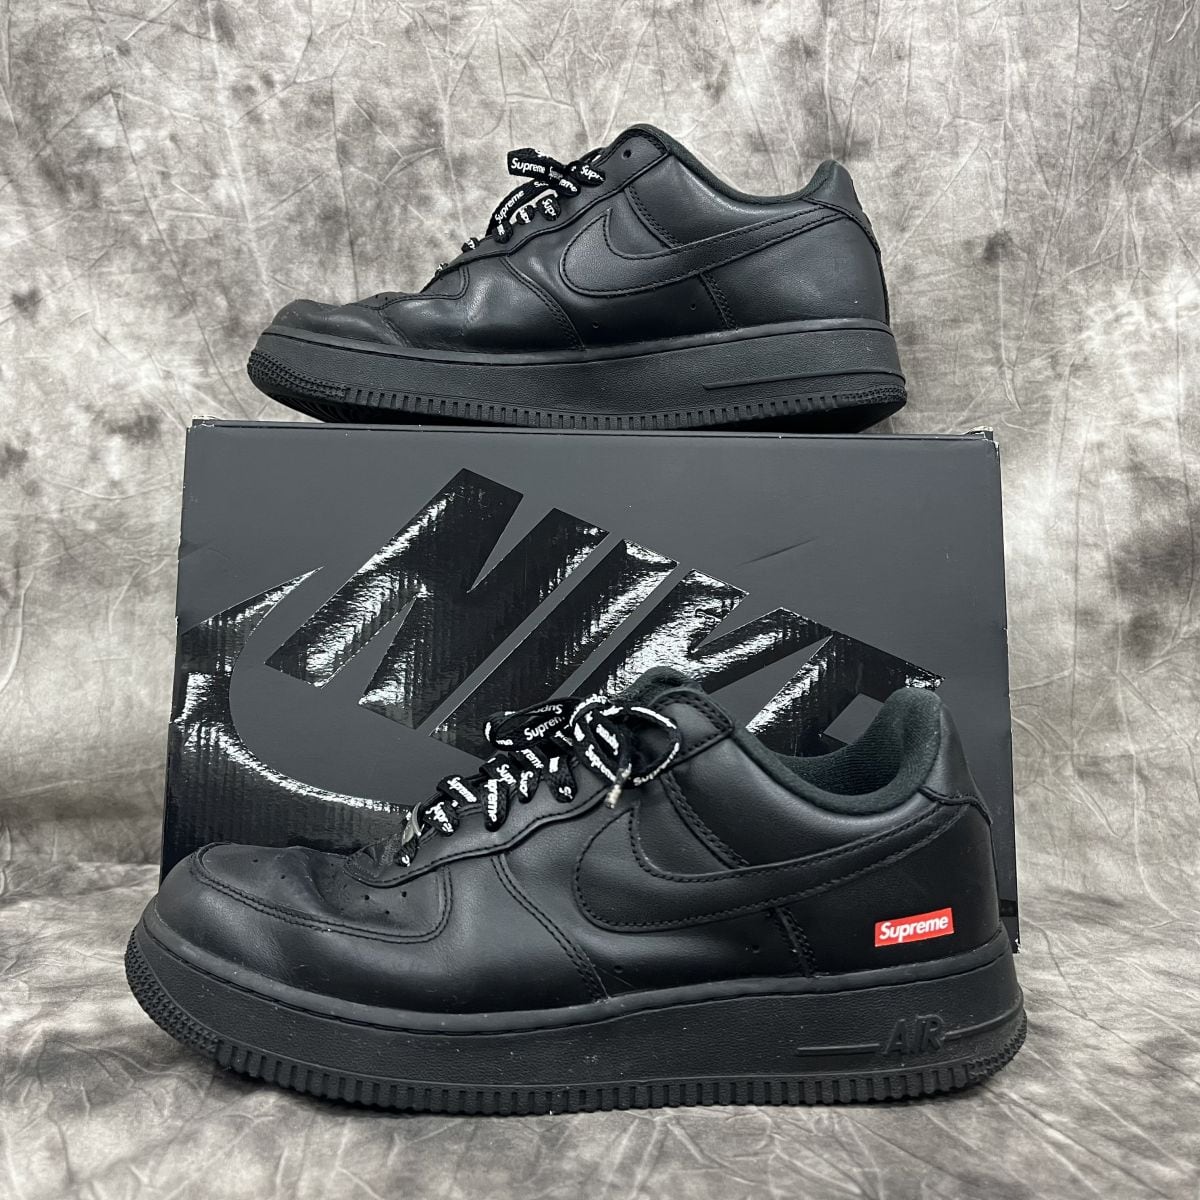 Supreme/Nike Air Force 1 Low Black